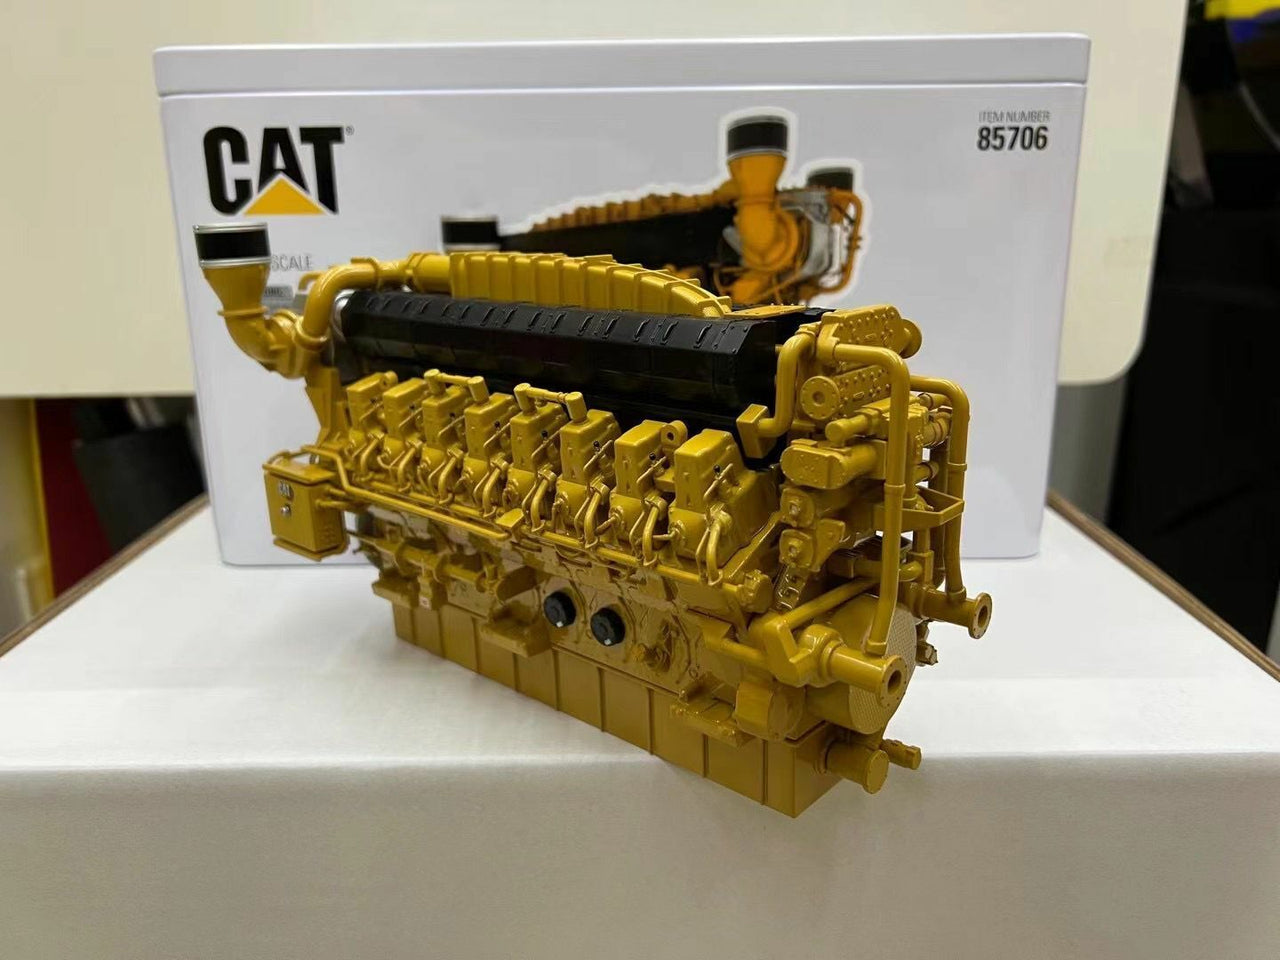 85706 Gas Engine Caterpillar G3616 A4 Scale 1:25